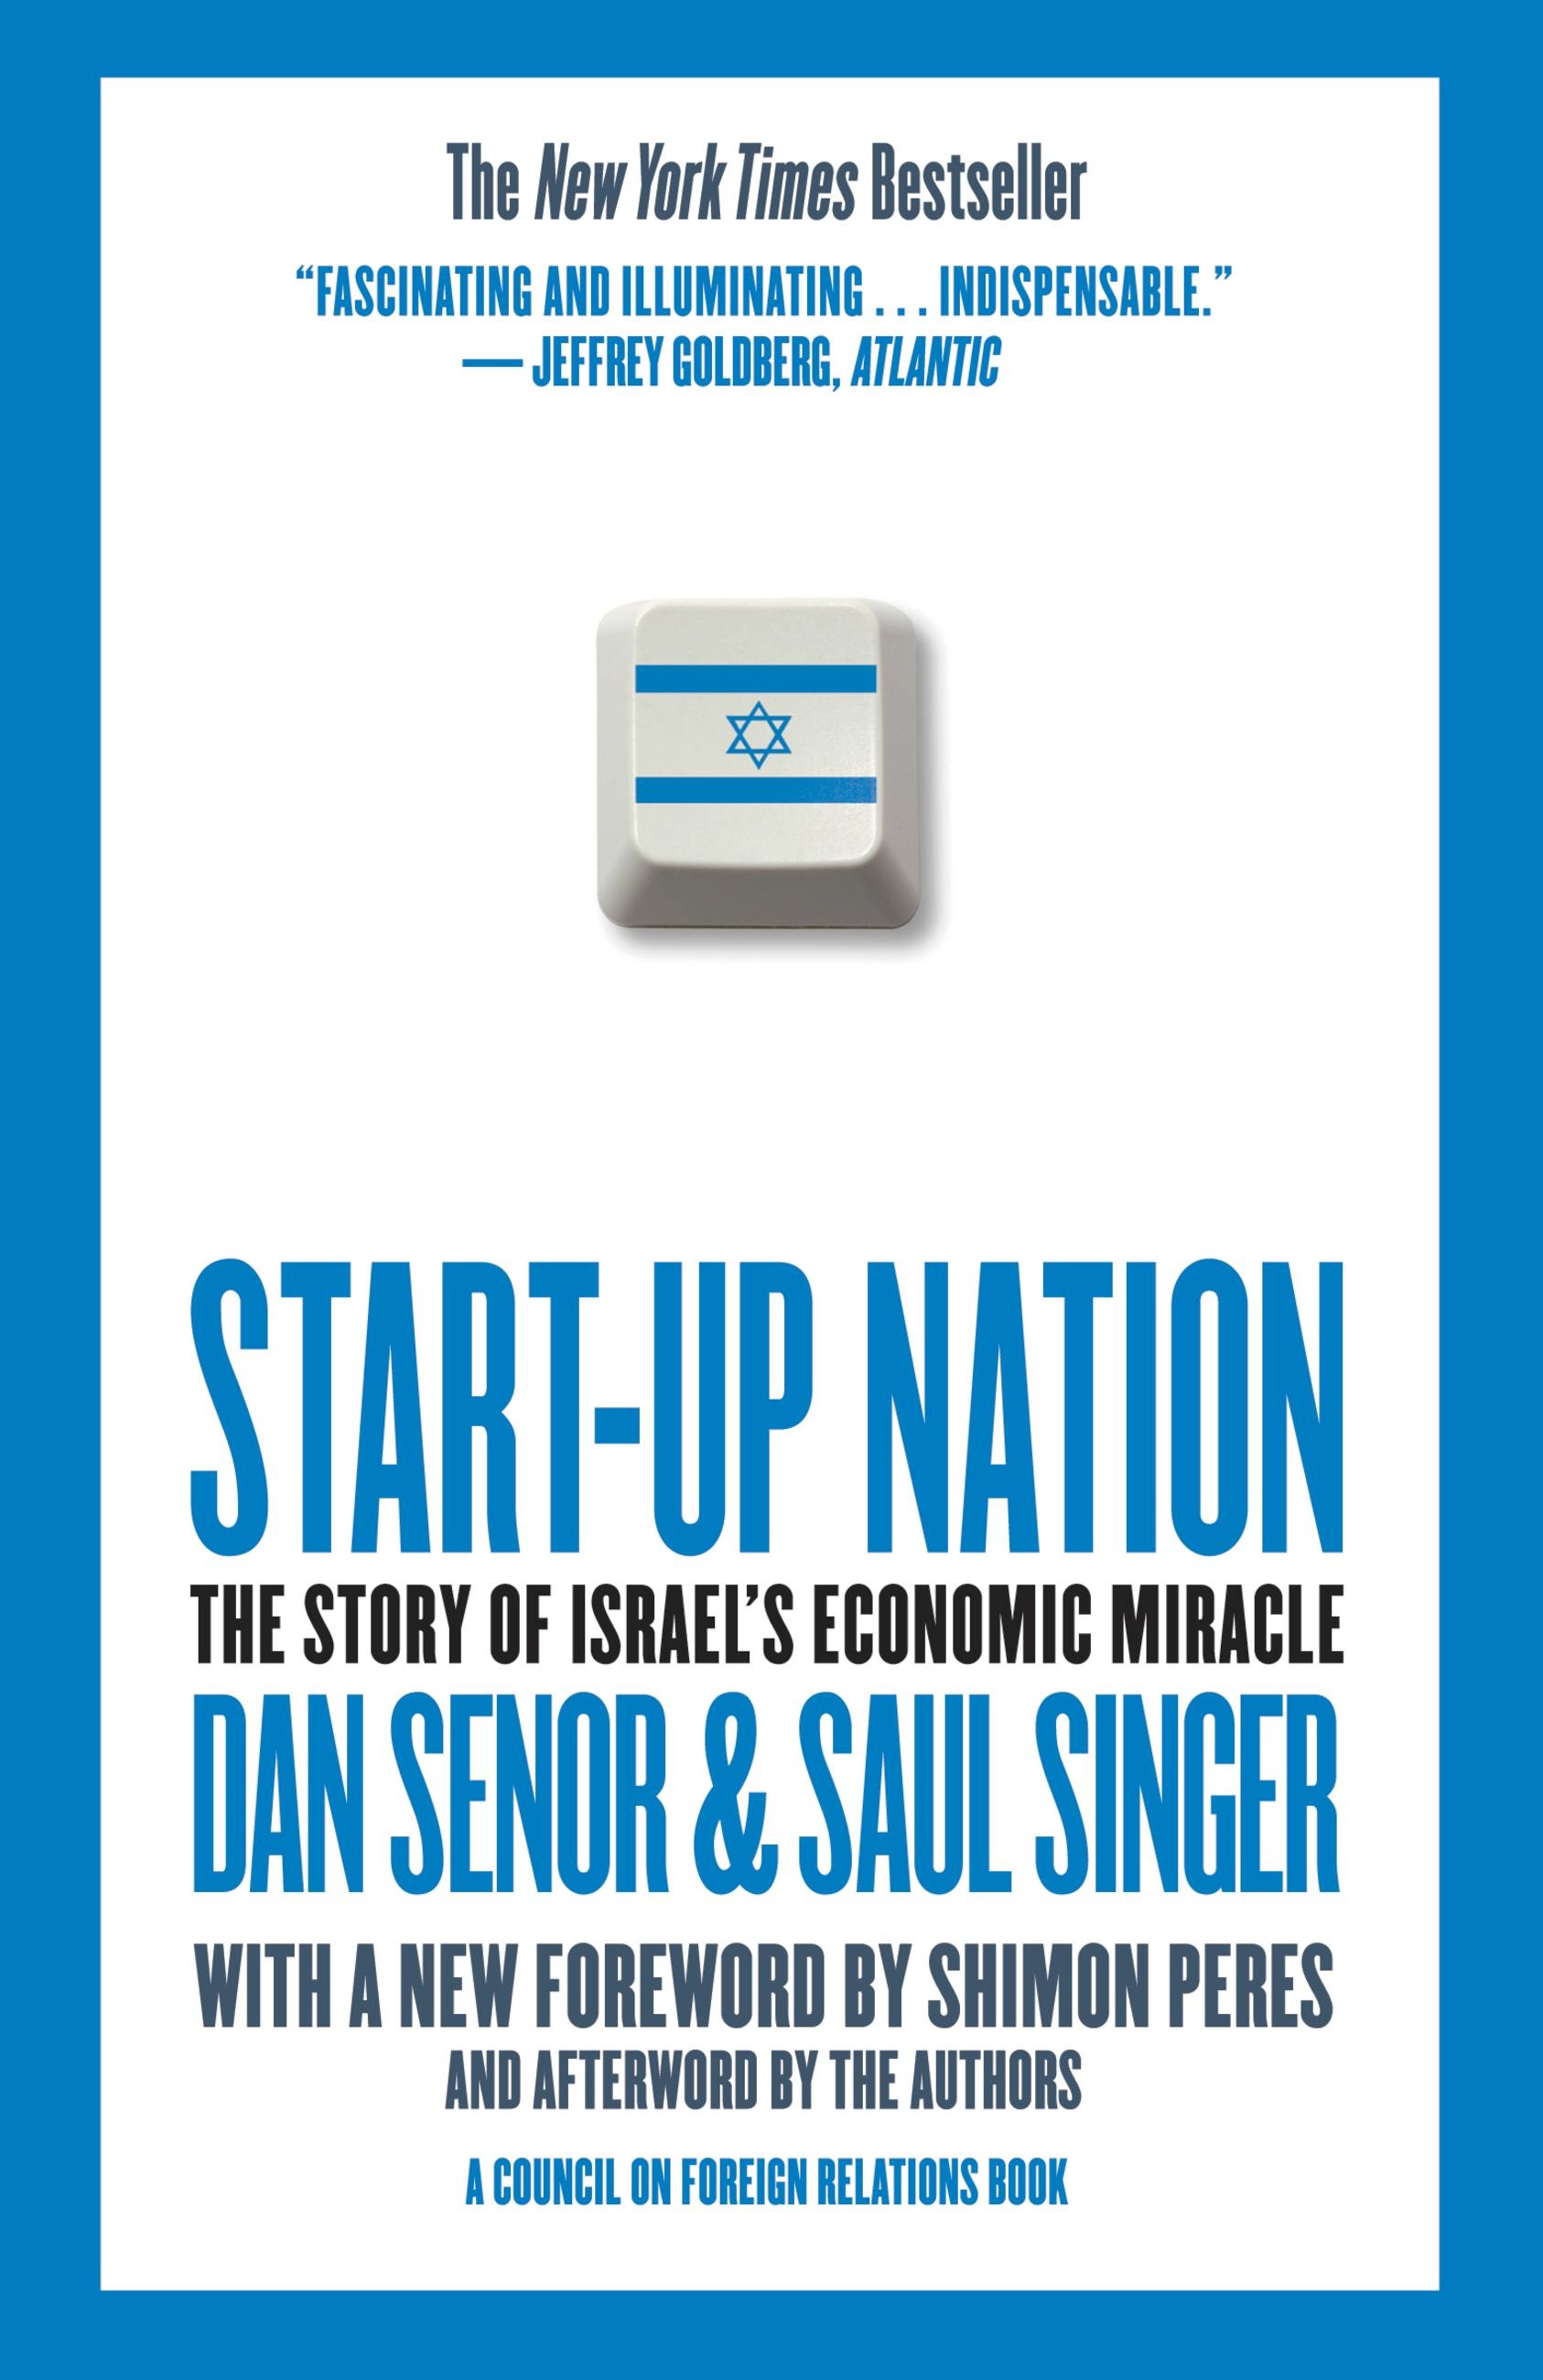 Startup Nation by Dan Senor Hachette Book Group